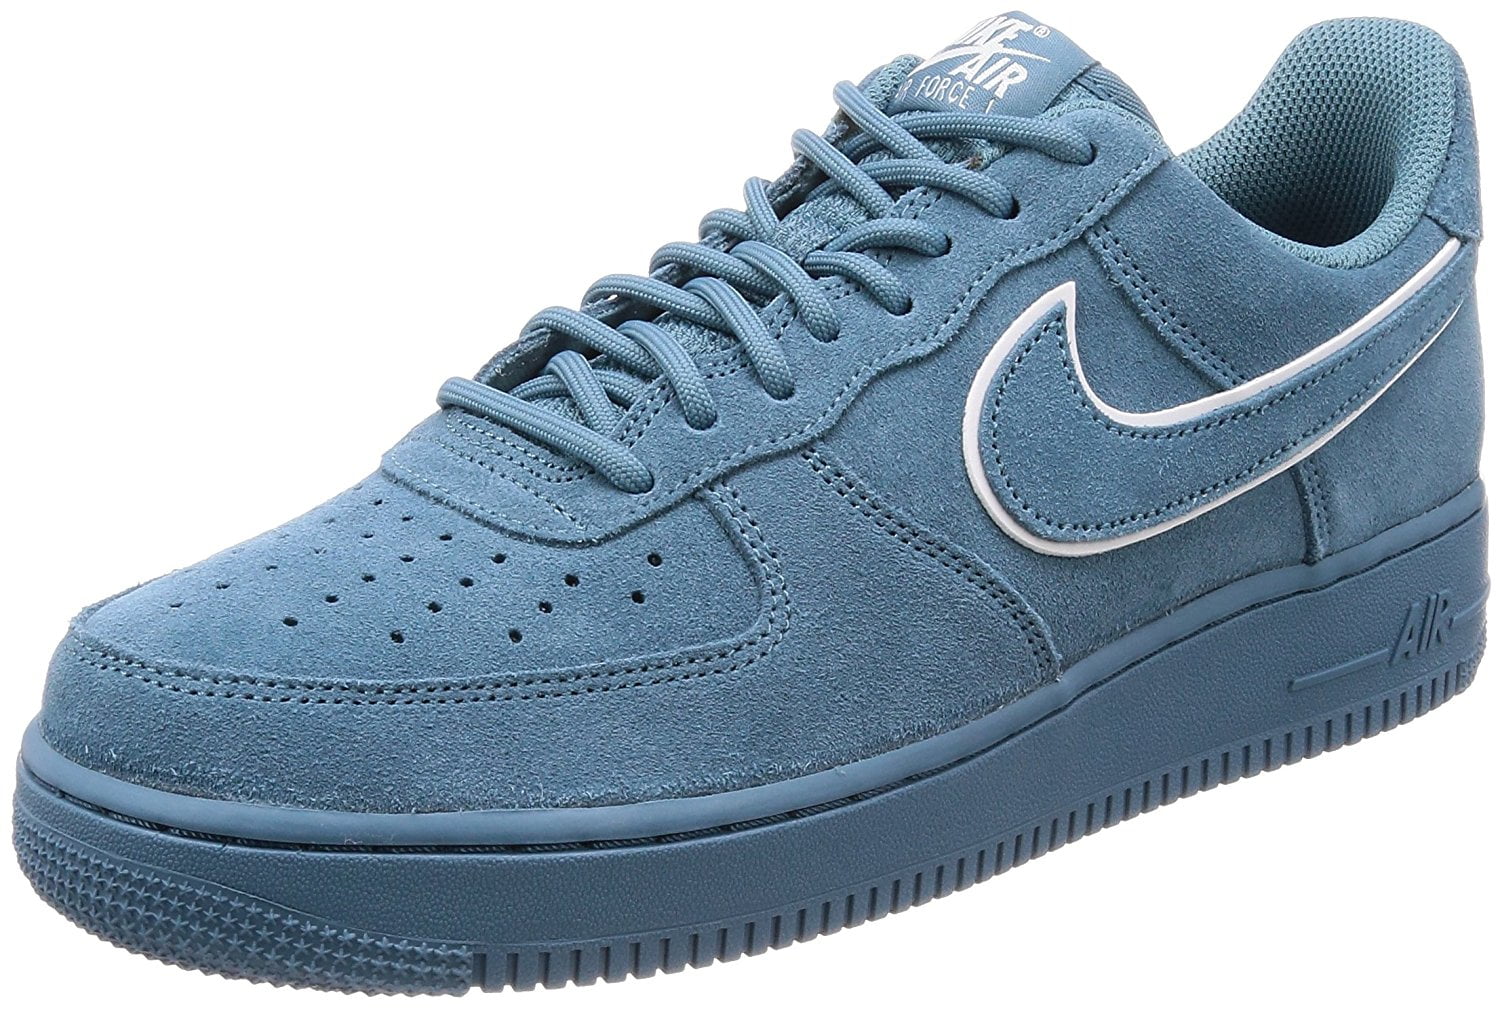 Nike Air Force 1 '07 Suede-Trimmed Sneakers